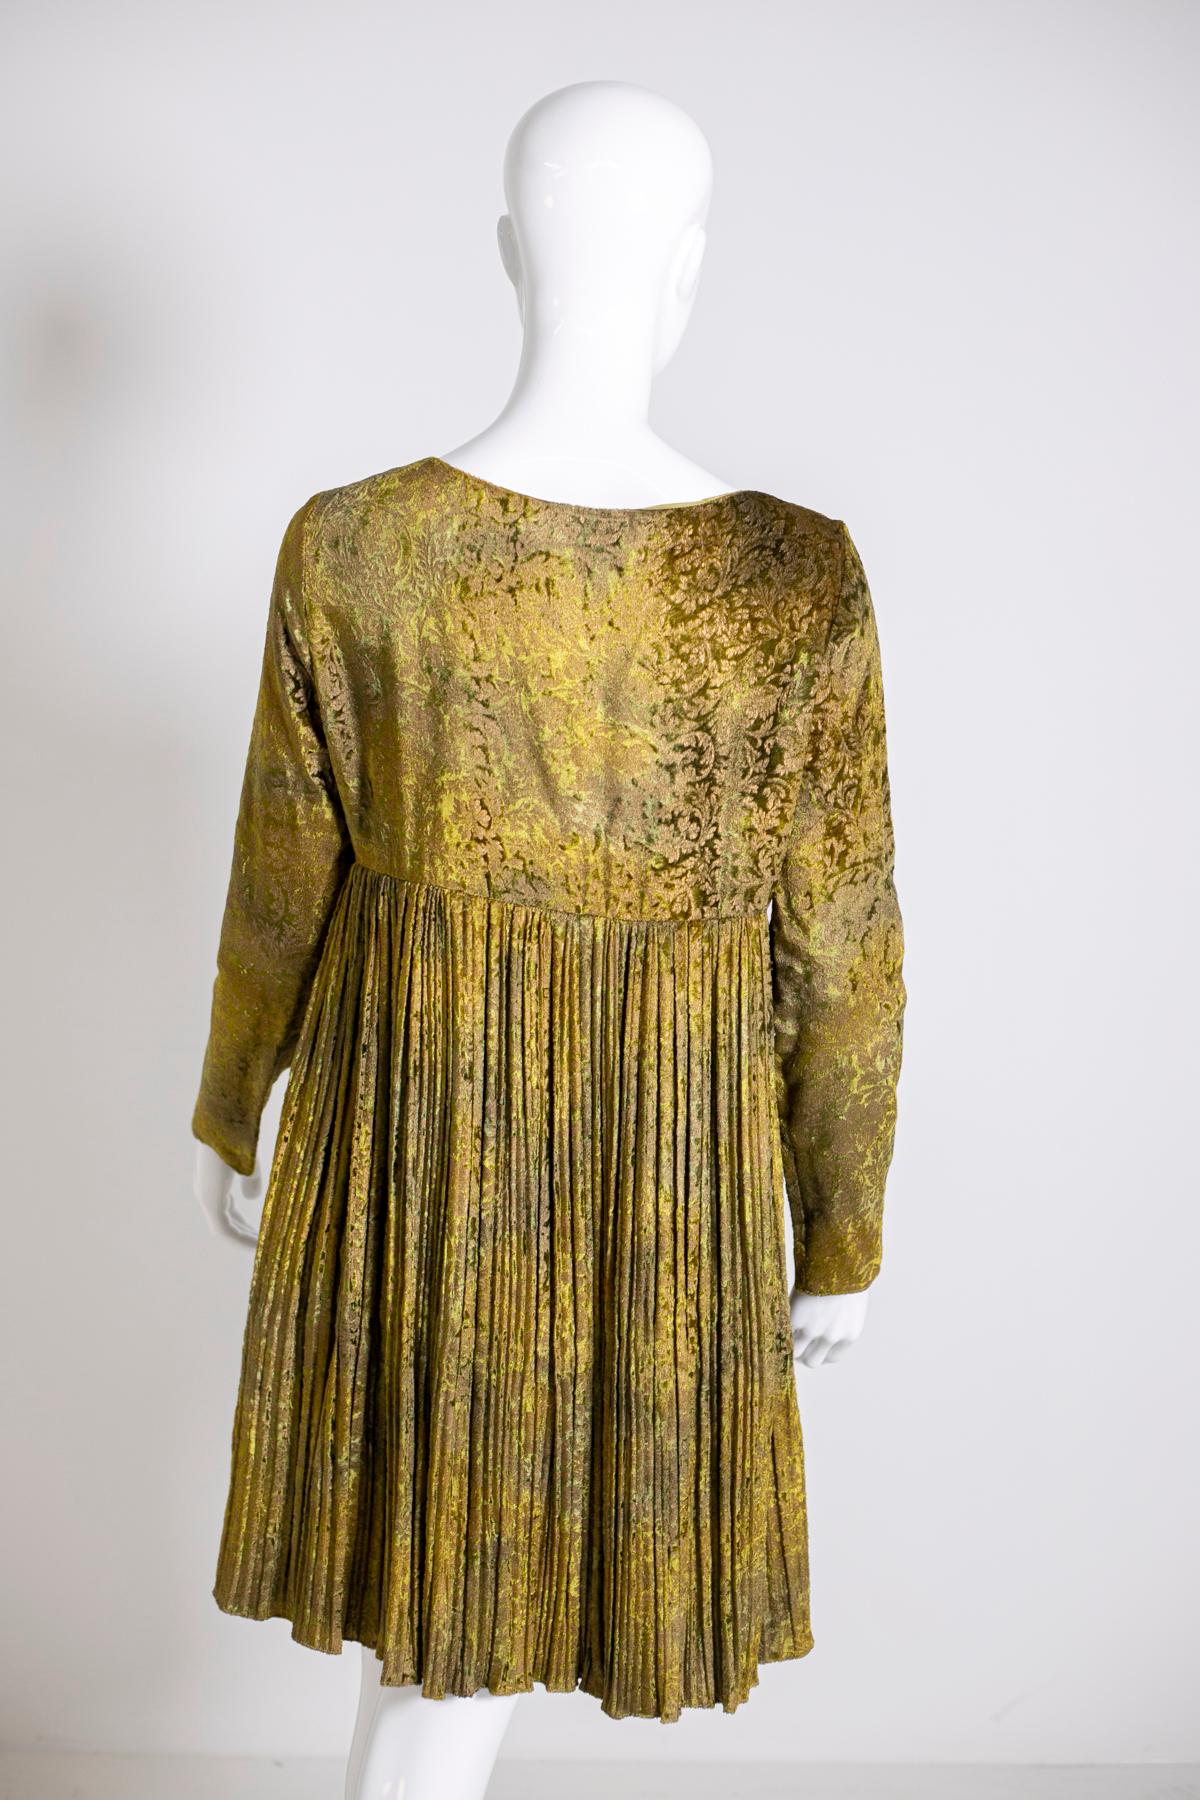 Women's Long Sleeve Woman's Dress in Olive Green Satin by Alberta Ferretti For Sale